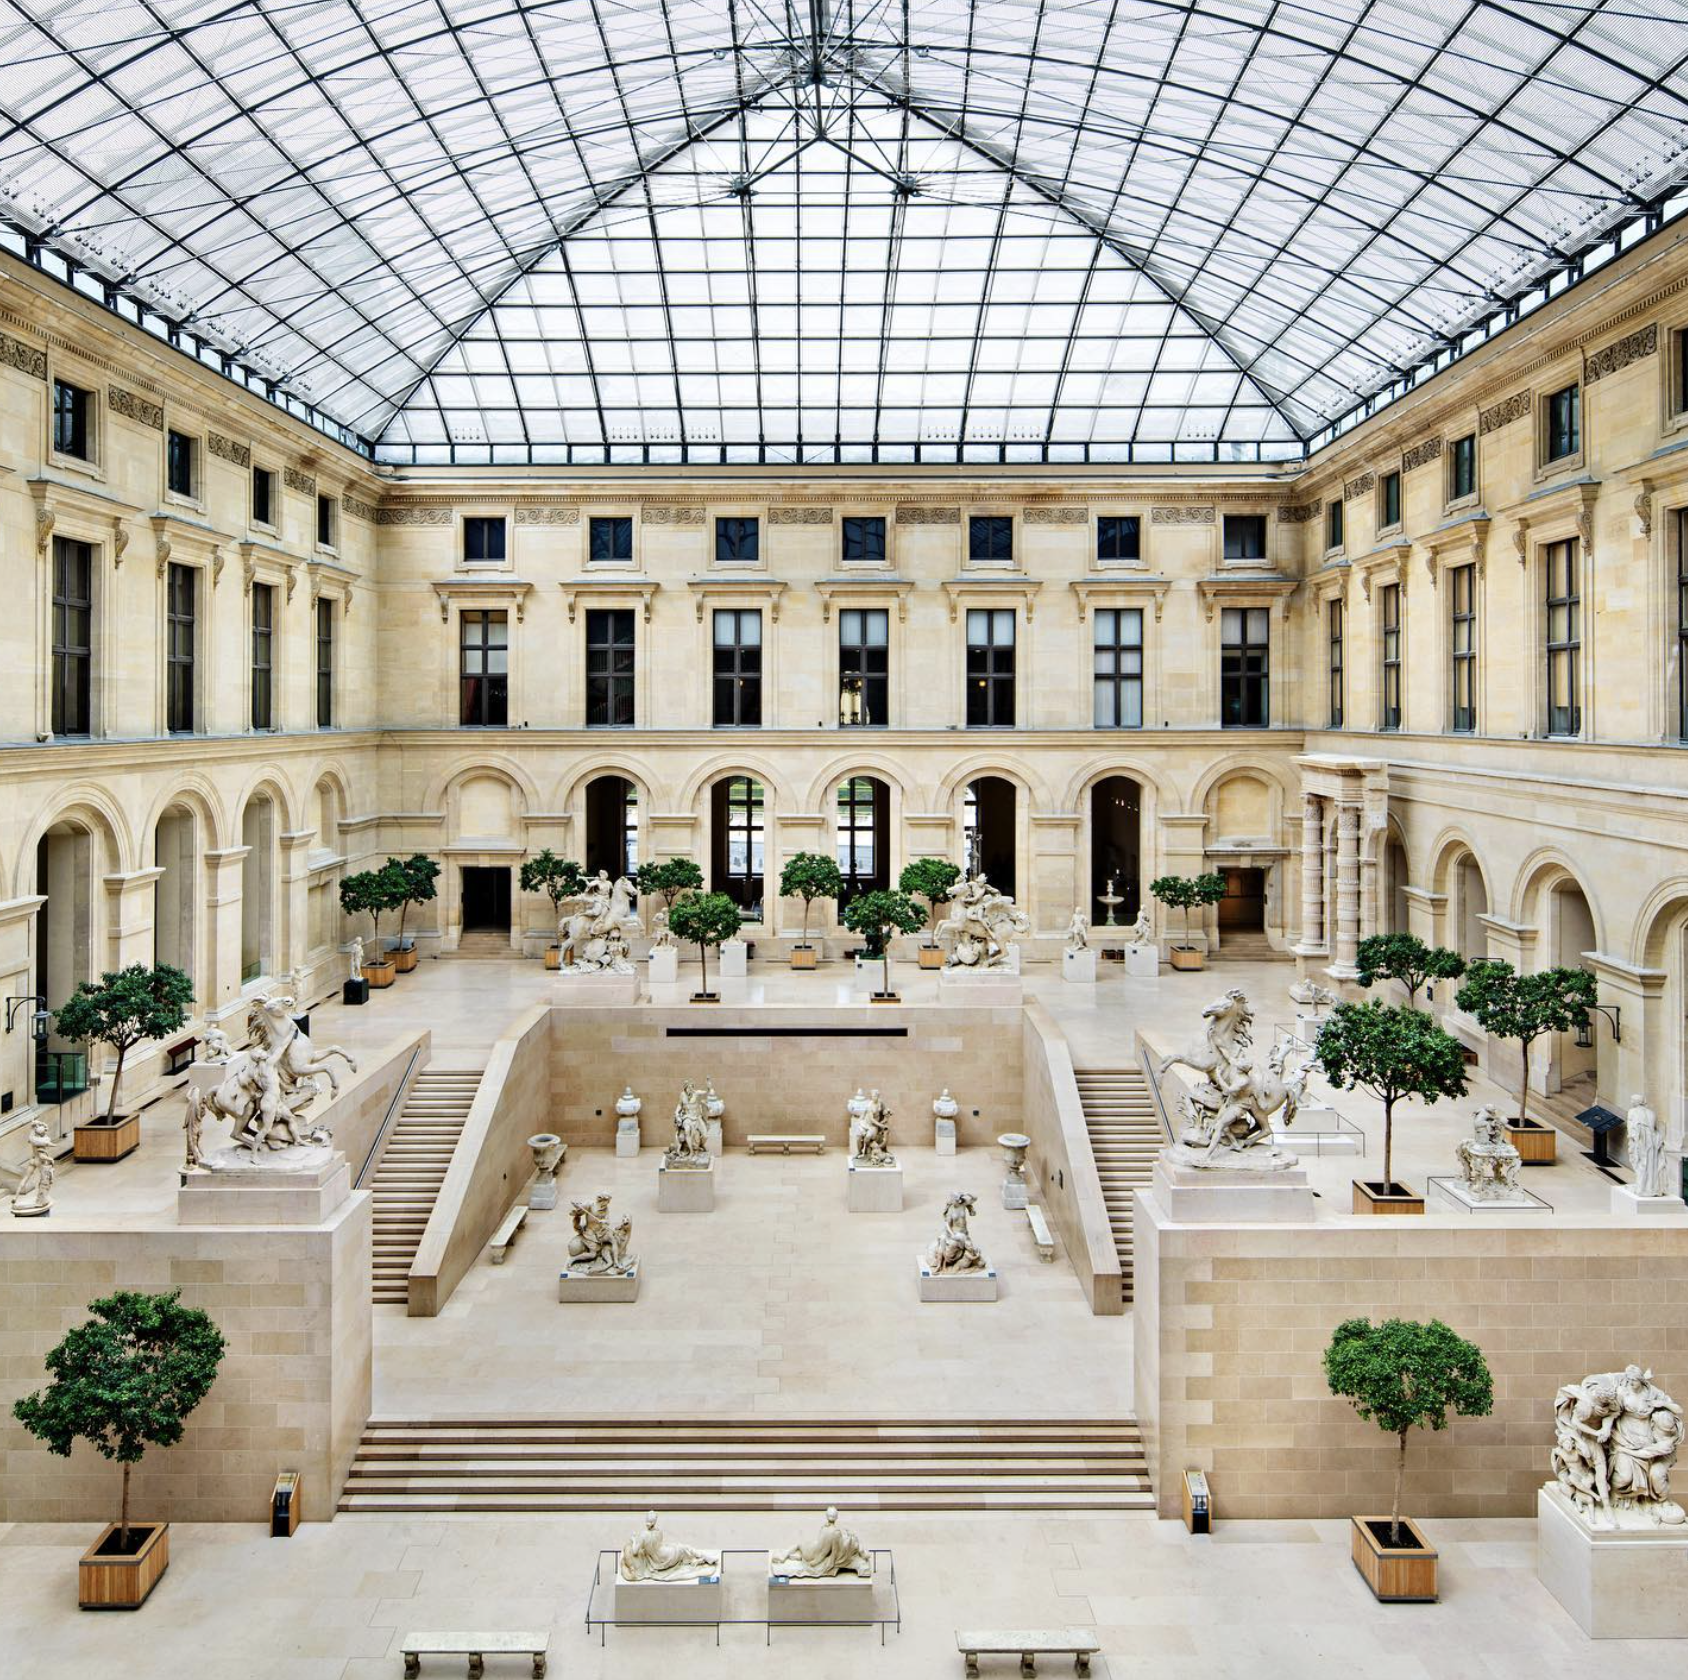  Museo del Louvre